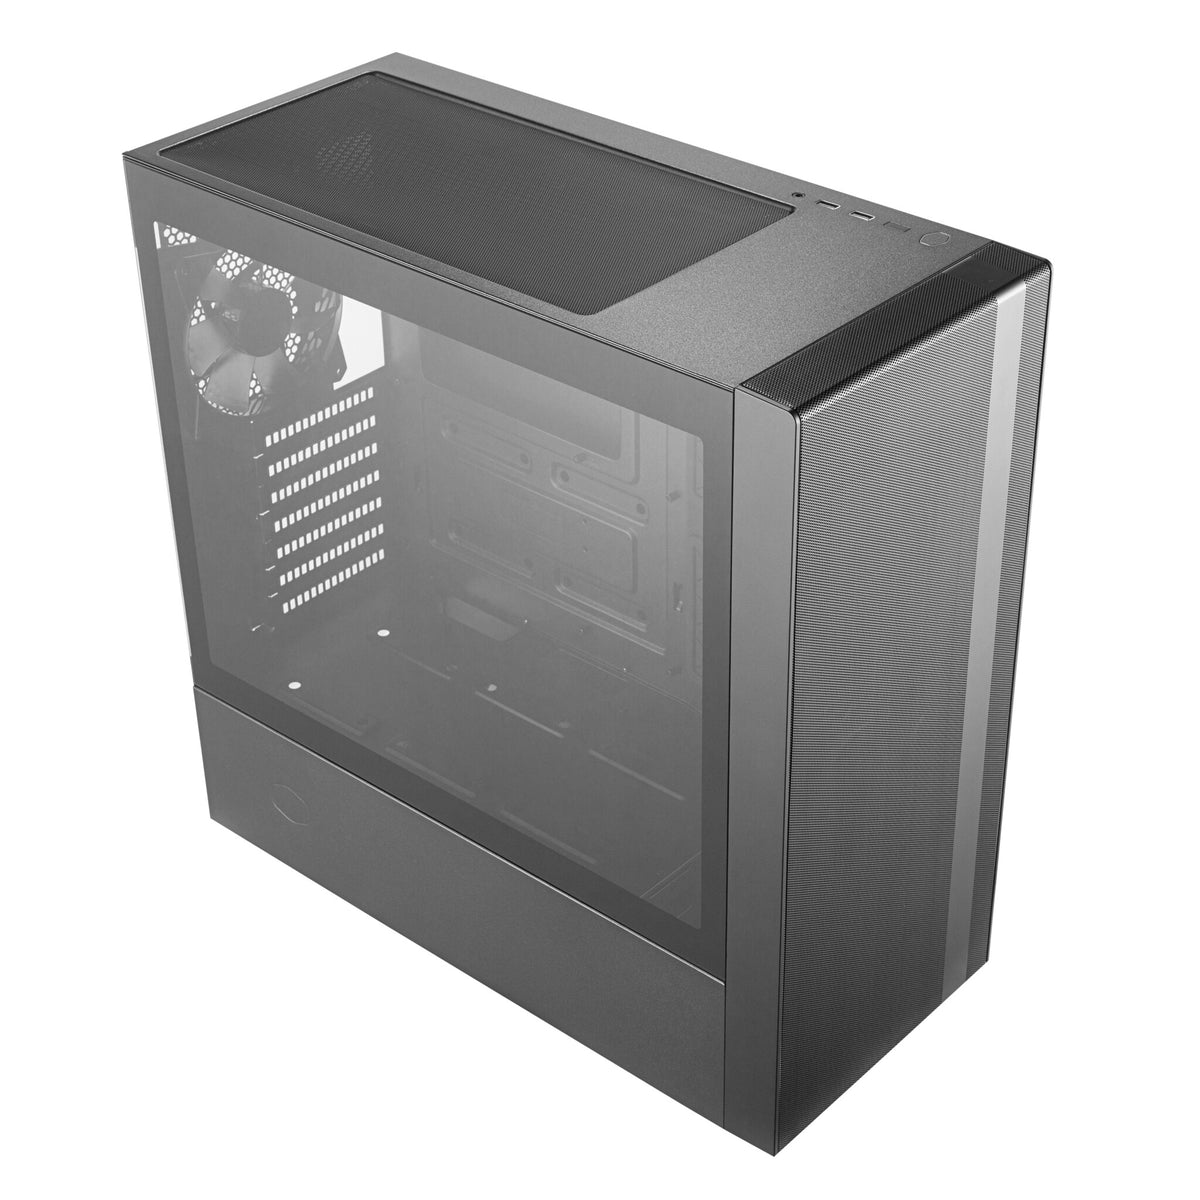 Cooler Master MasterBox NR600 - ATX Mid Tower Case in Black (No ODD)